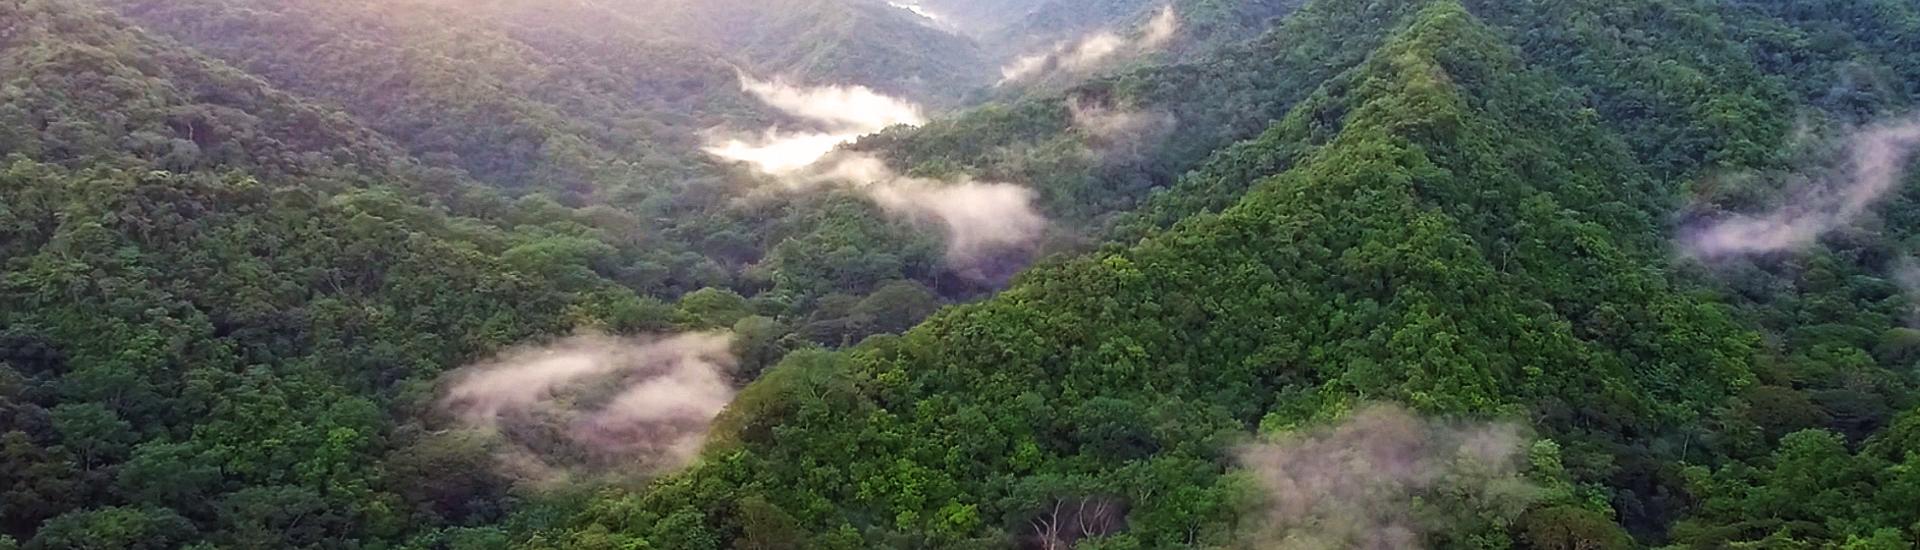 Aerial shot of Costa Rica site